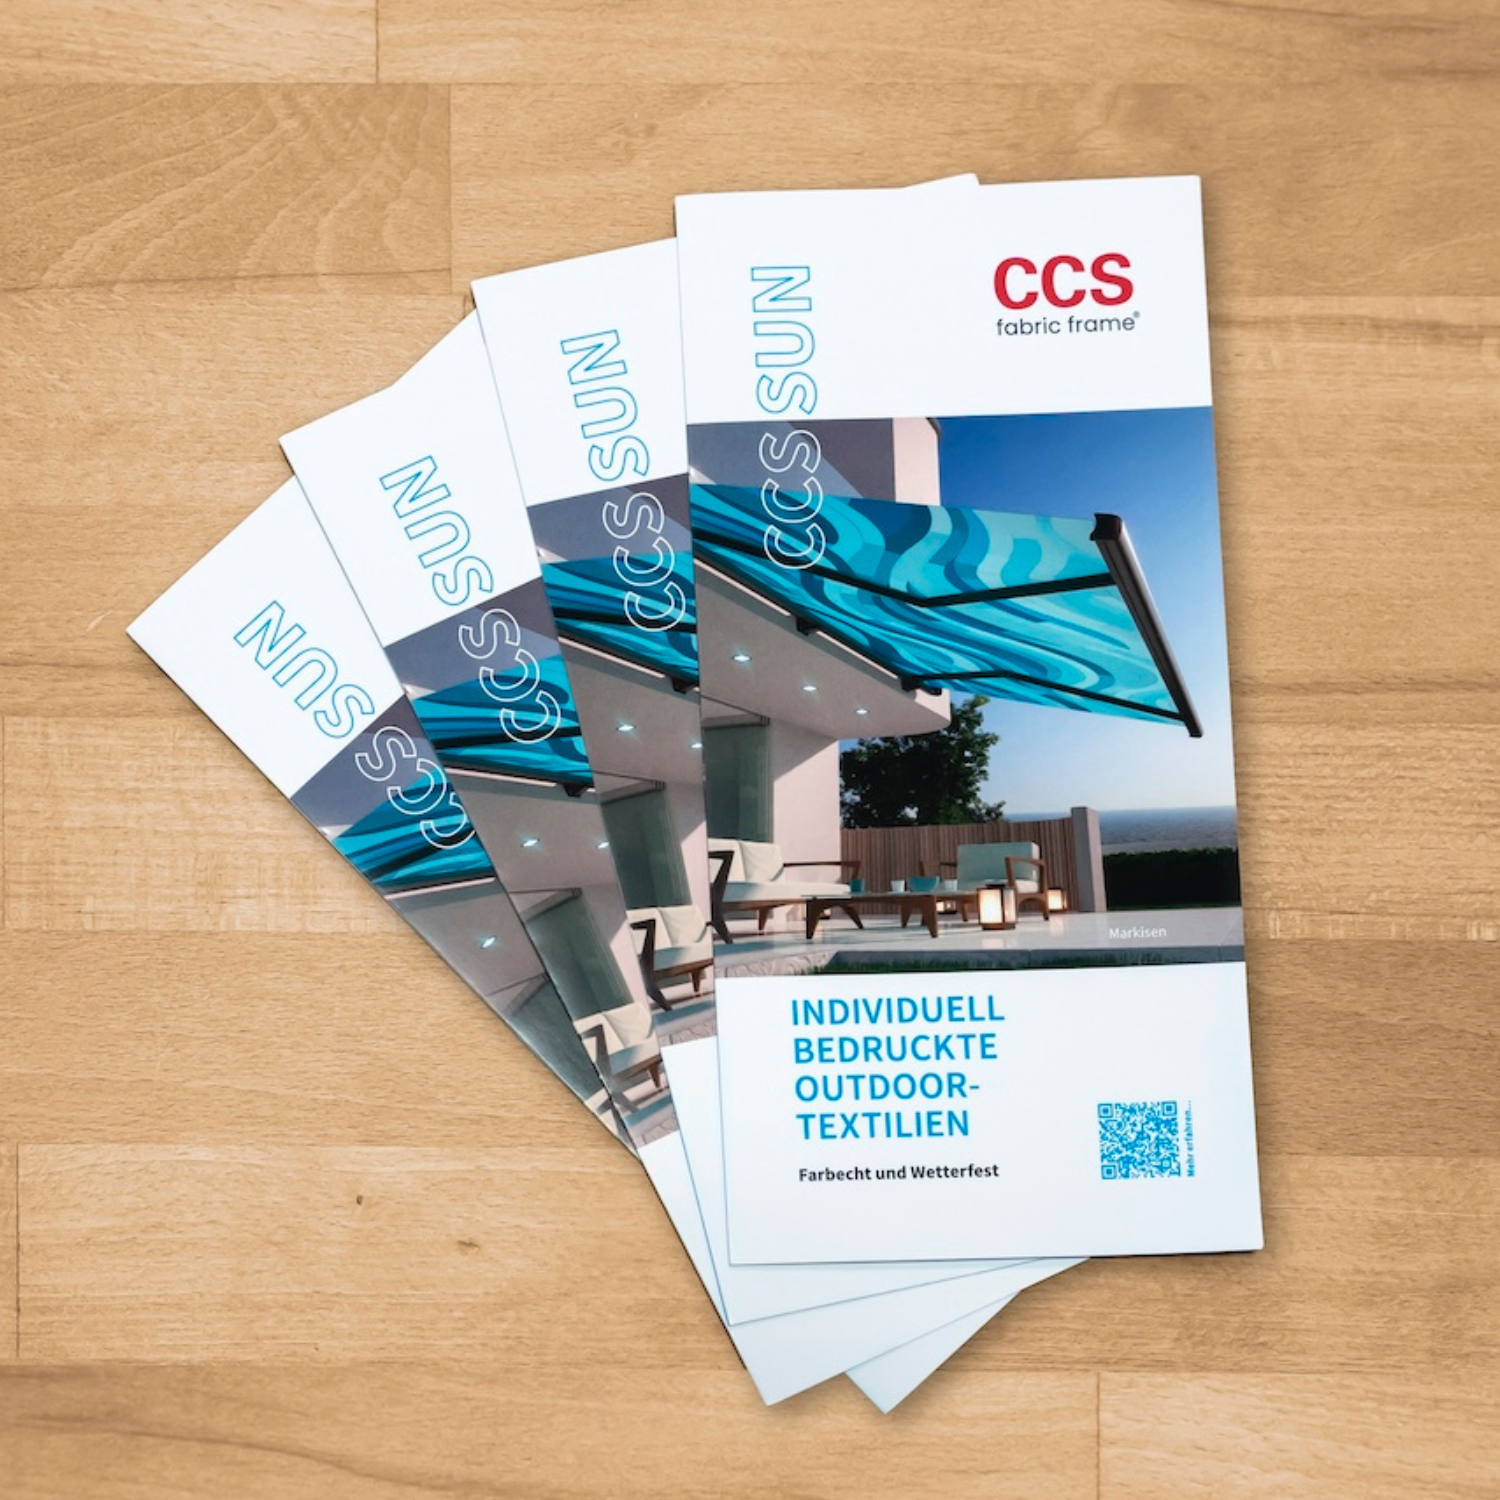 CCS fabric frame Outdoor Textilien Flyer 